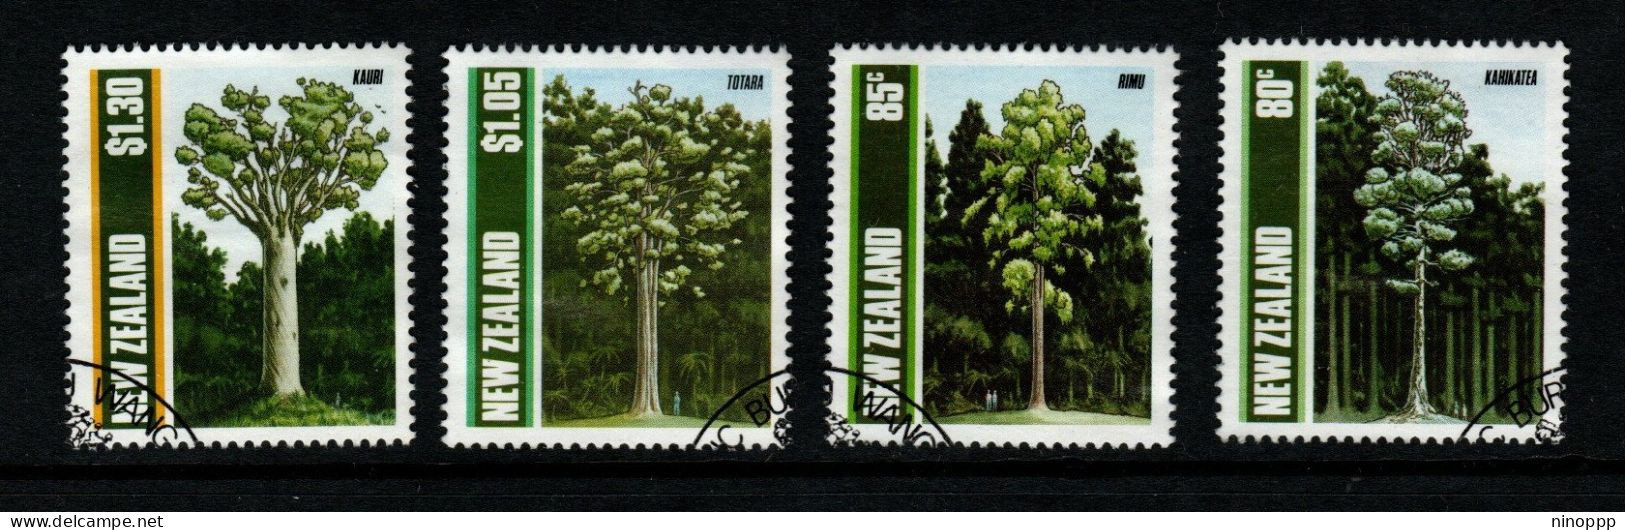 New Zealand SG 1511-14  1989 Trees,used - Usados